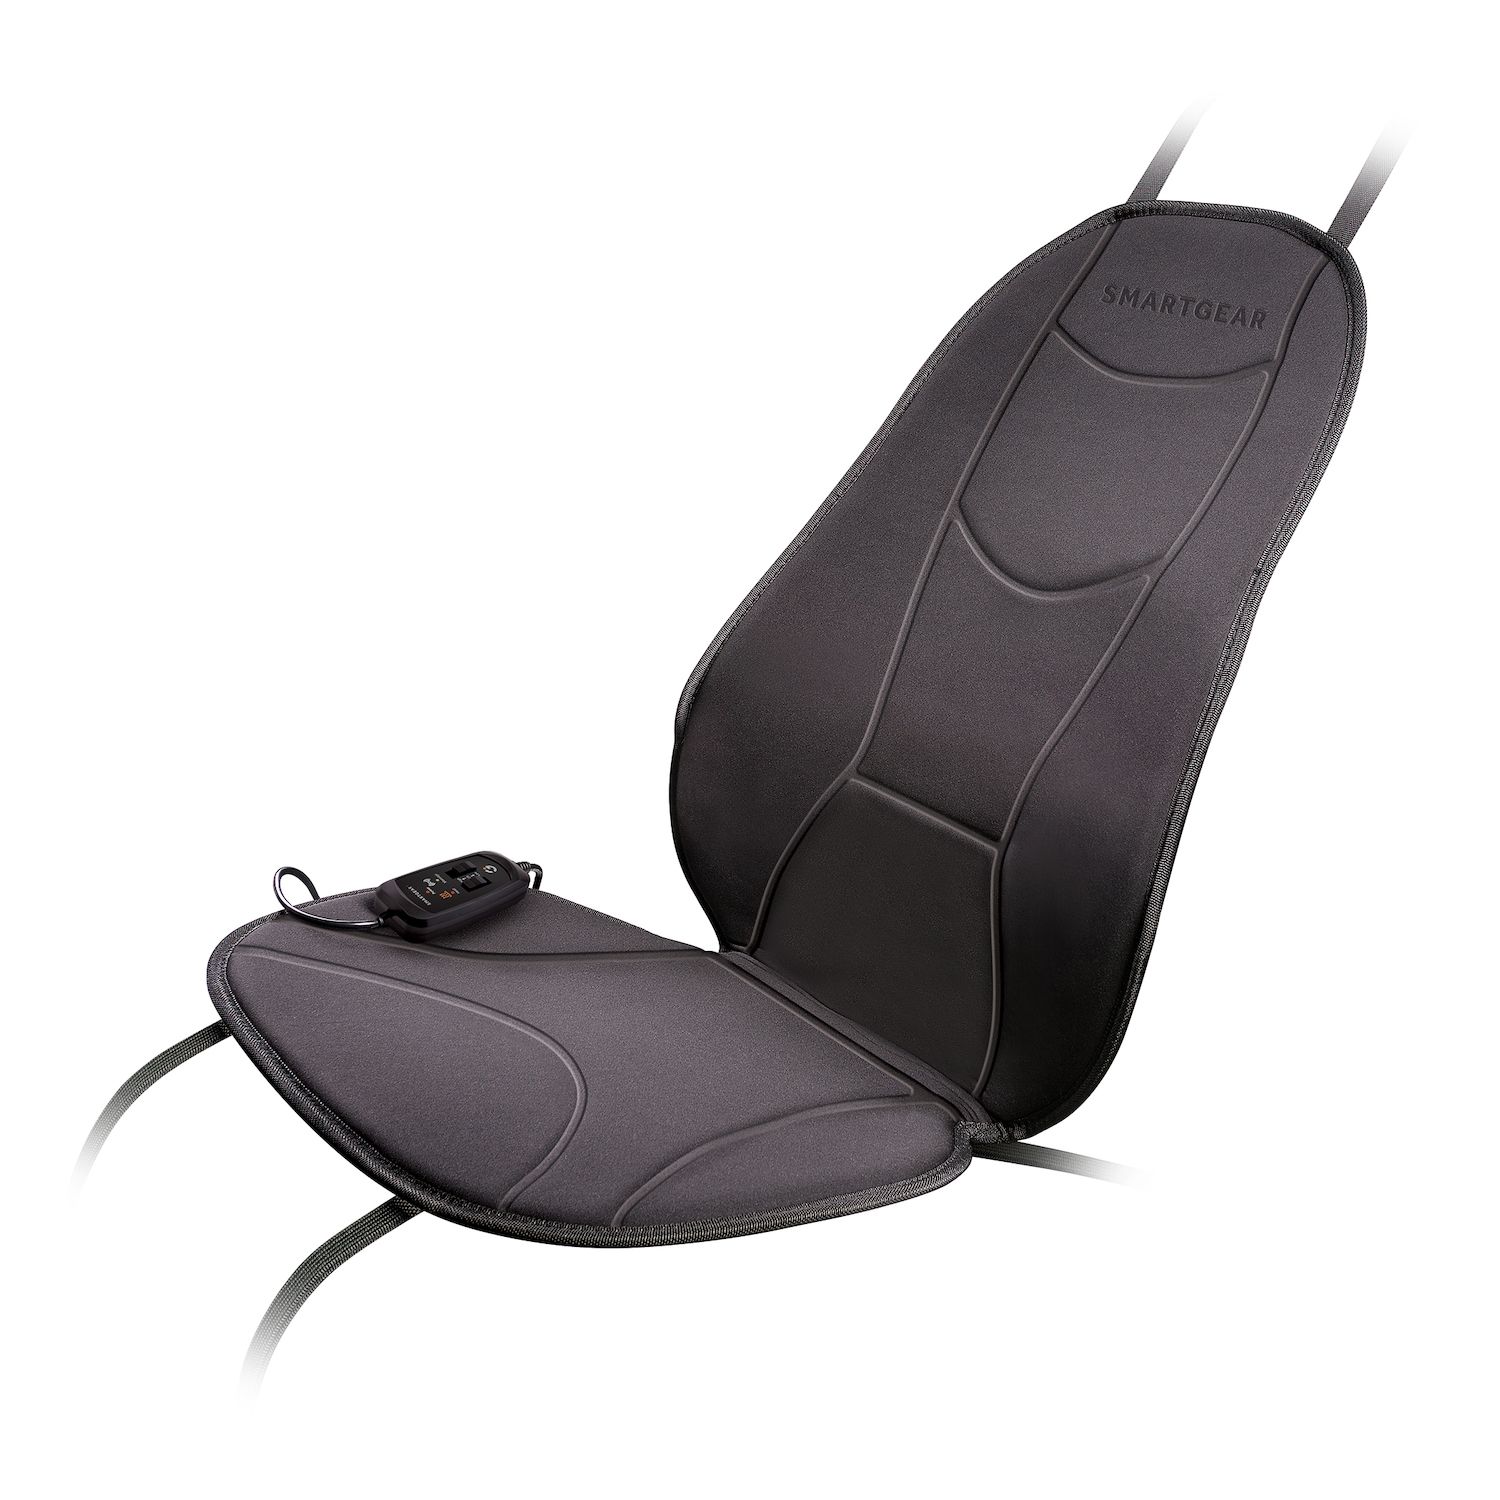 Sharper Image Massager Seat Topper 4-Node Shiatsu with Heat and Vibration